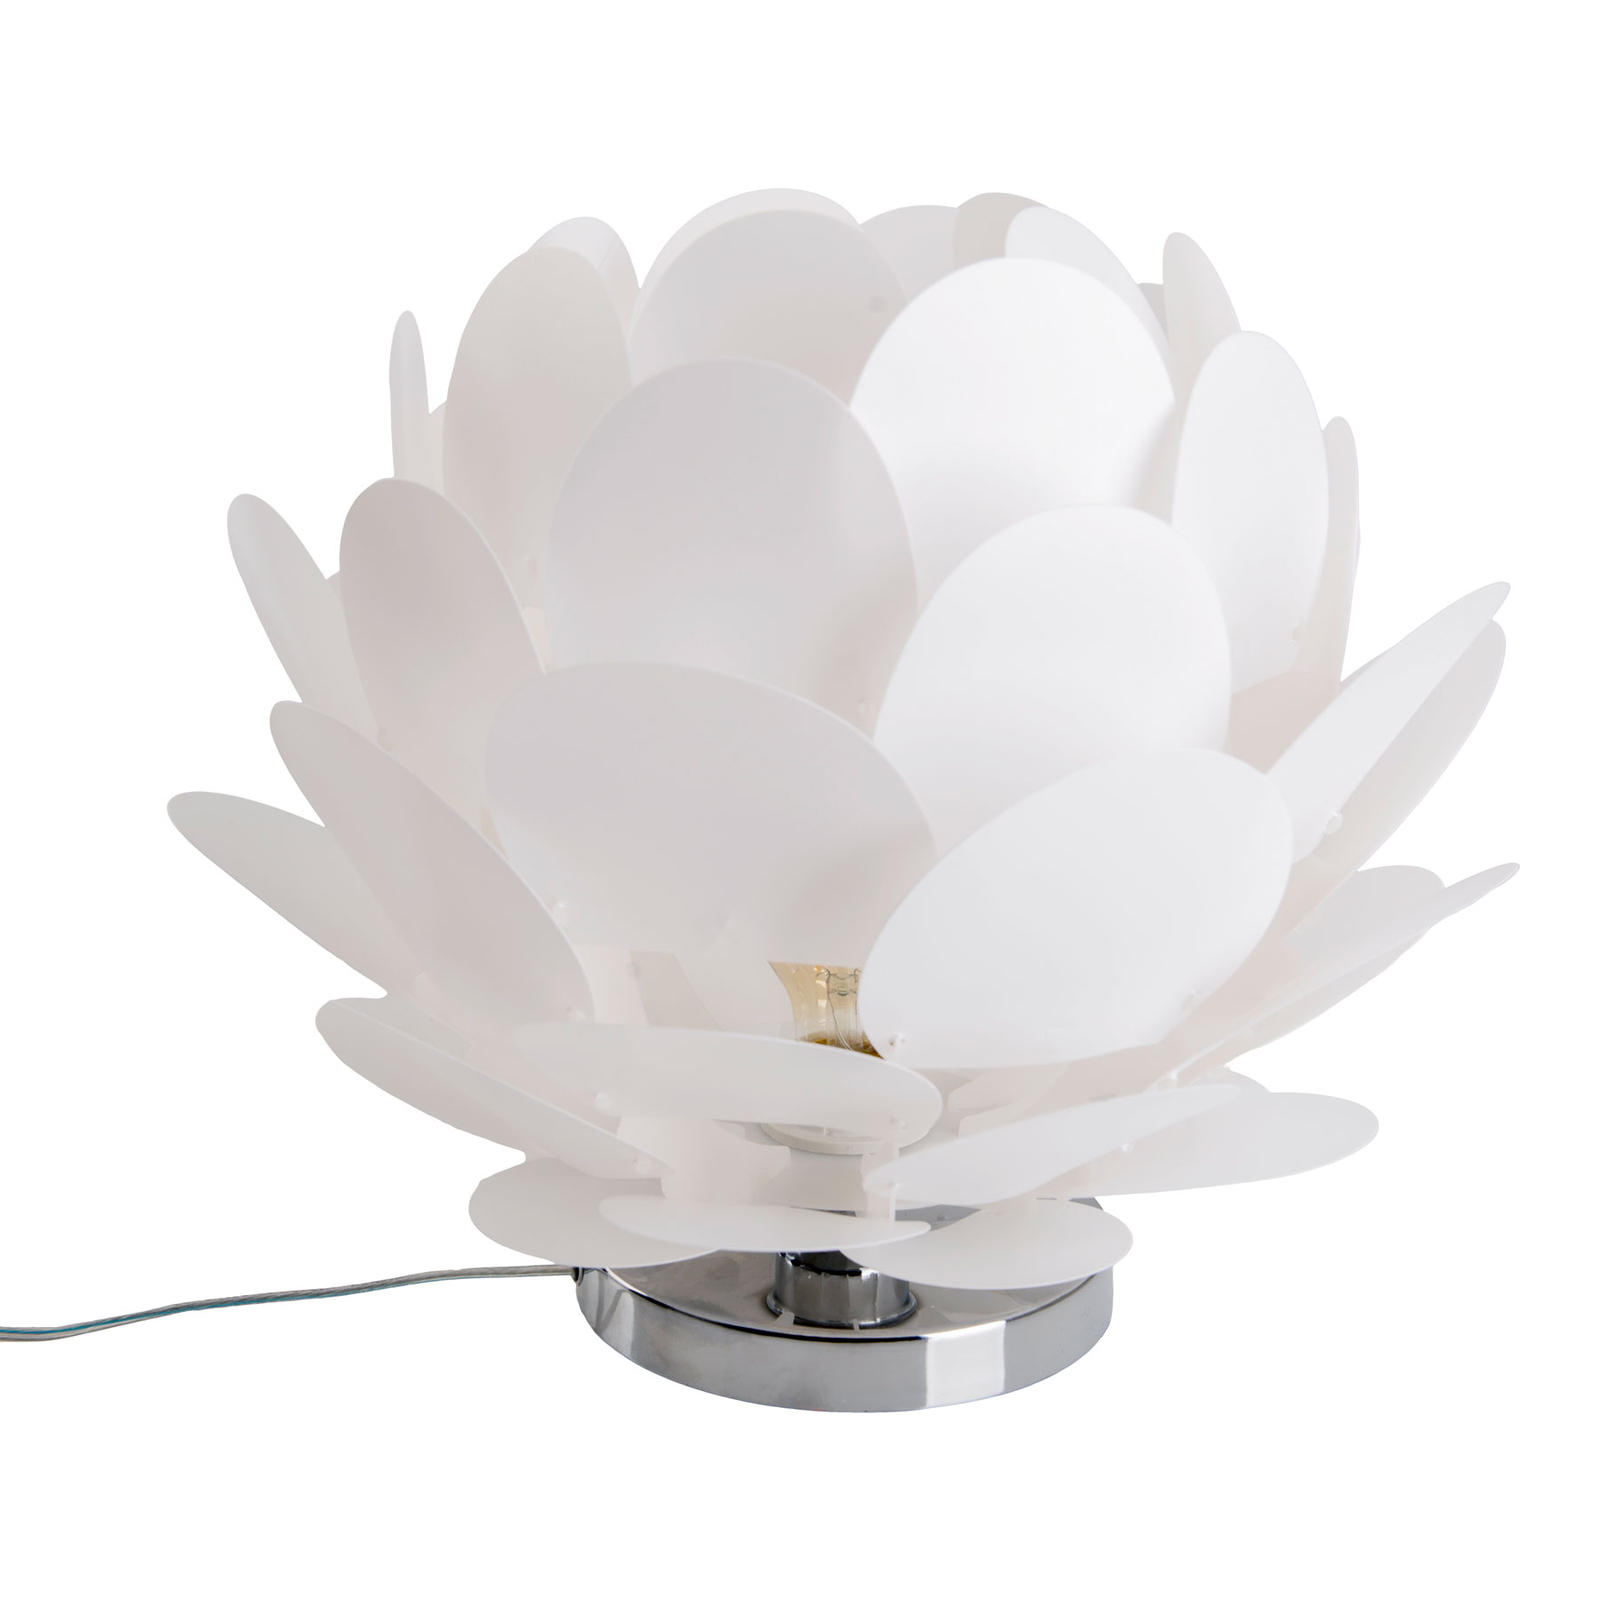 Baltos spalvos gėlės formos stalinė lempa "Fora